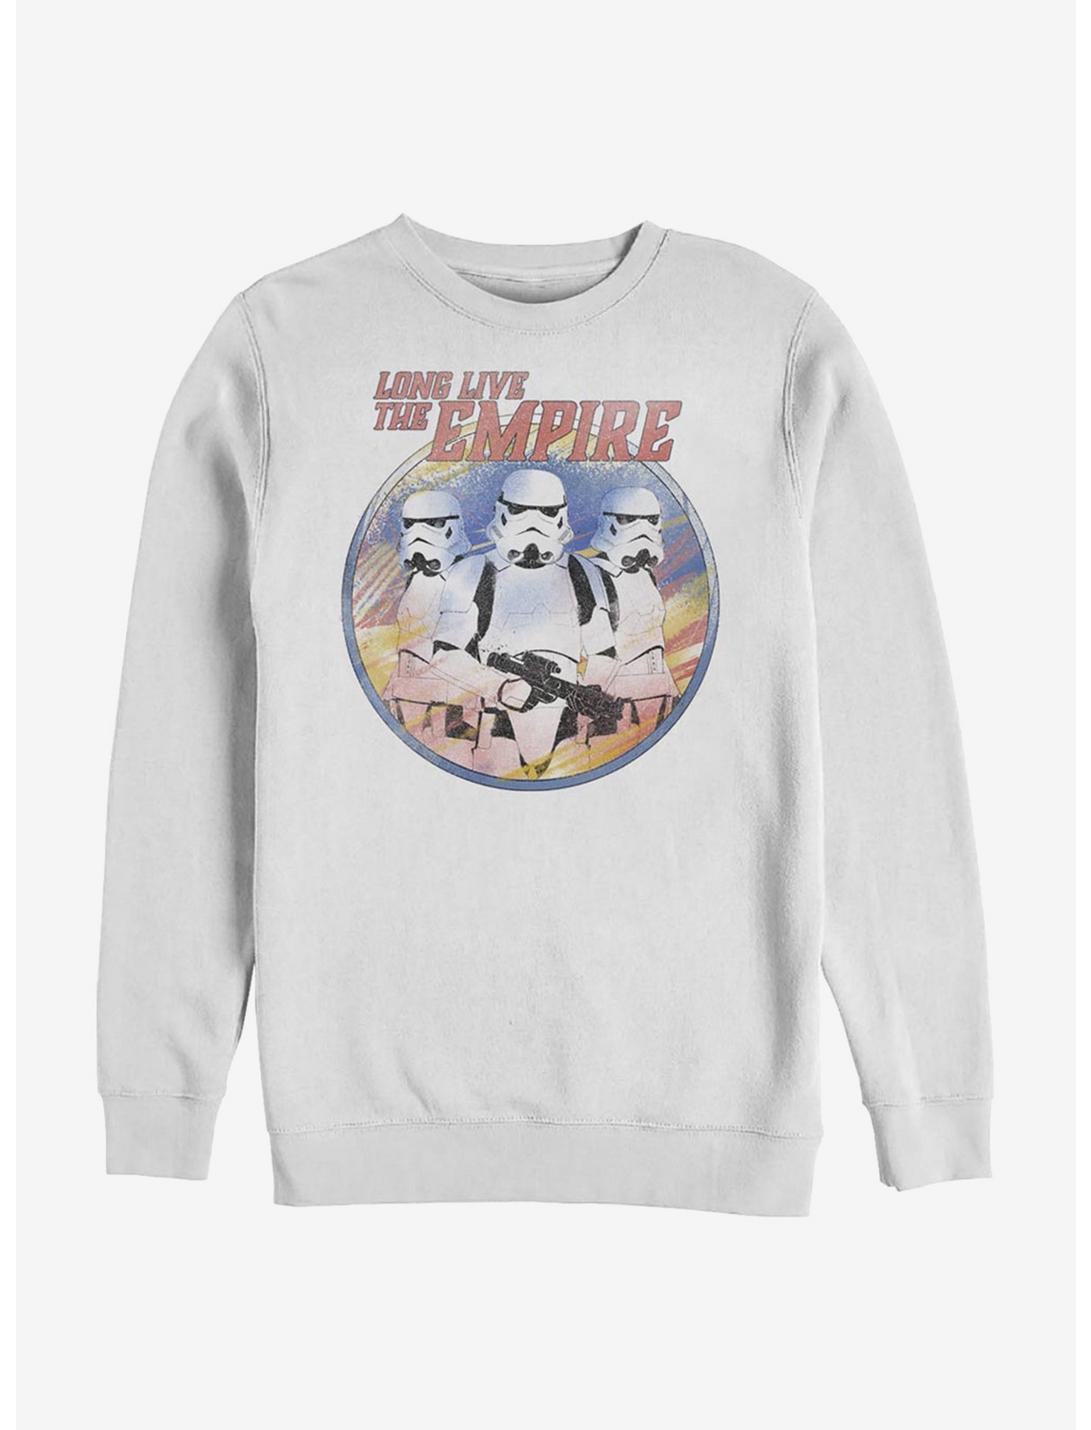 Star Wars The Mandalorian Long Live the Empire Sweatshirt, WHITE, hi-res